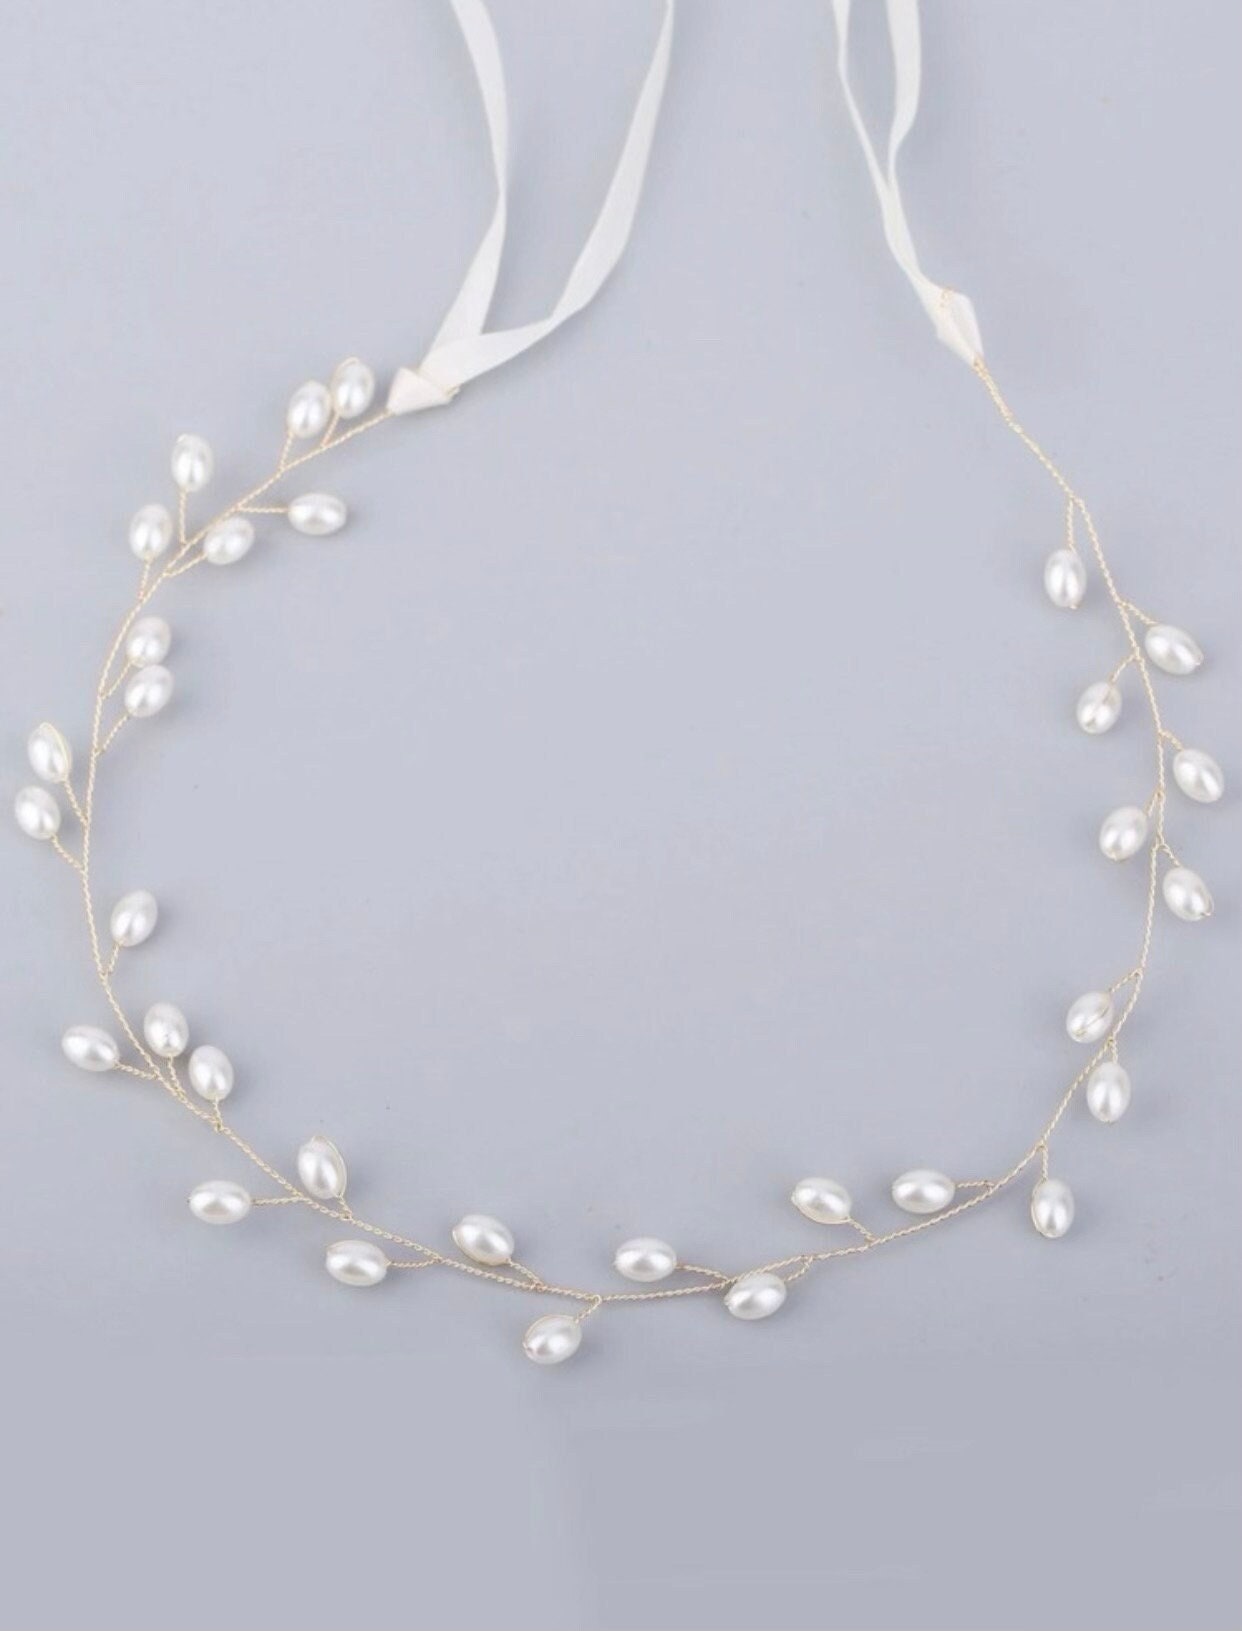 50pcs/100pcs/200pcs White Bows,bow Beads,acrylic Ribbon Bow Beads,abs Pearl  White Bow,acrylic Ribbon Bow Beads,jewelry Supply,27x16mm 